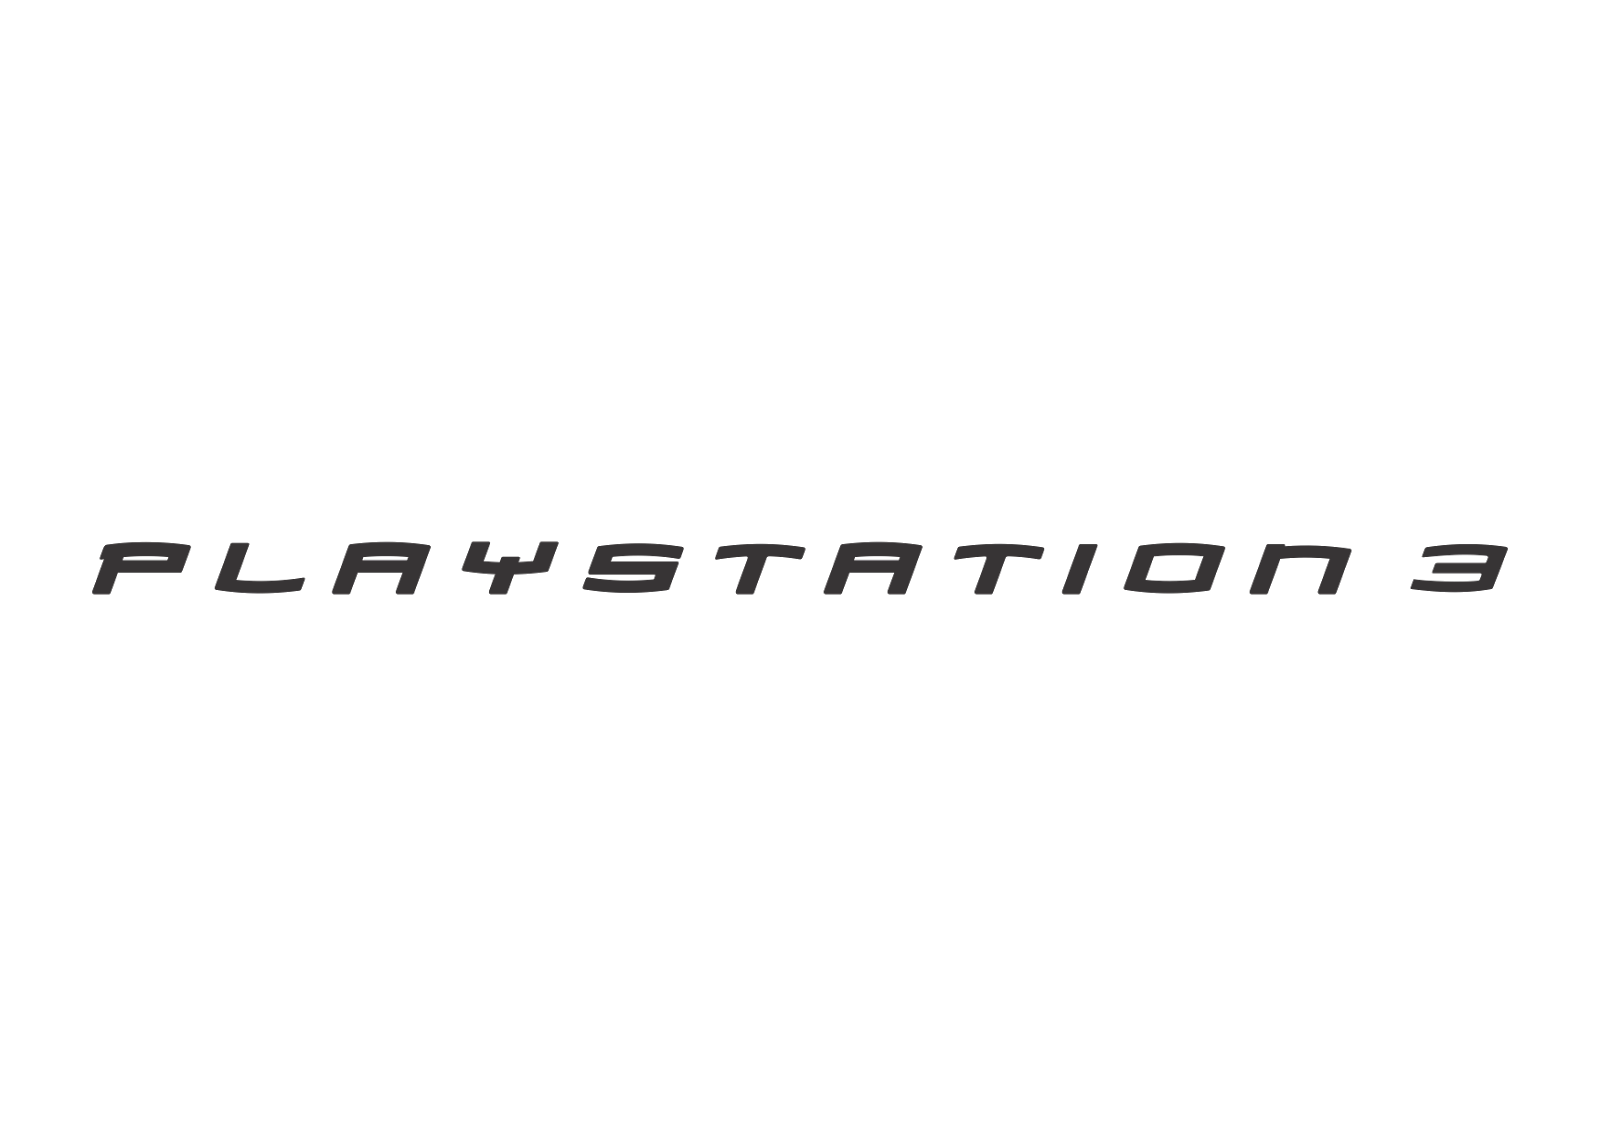 PS3 Logo - Playstation Png Logo - Free Transparent PNG Logos